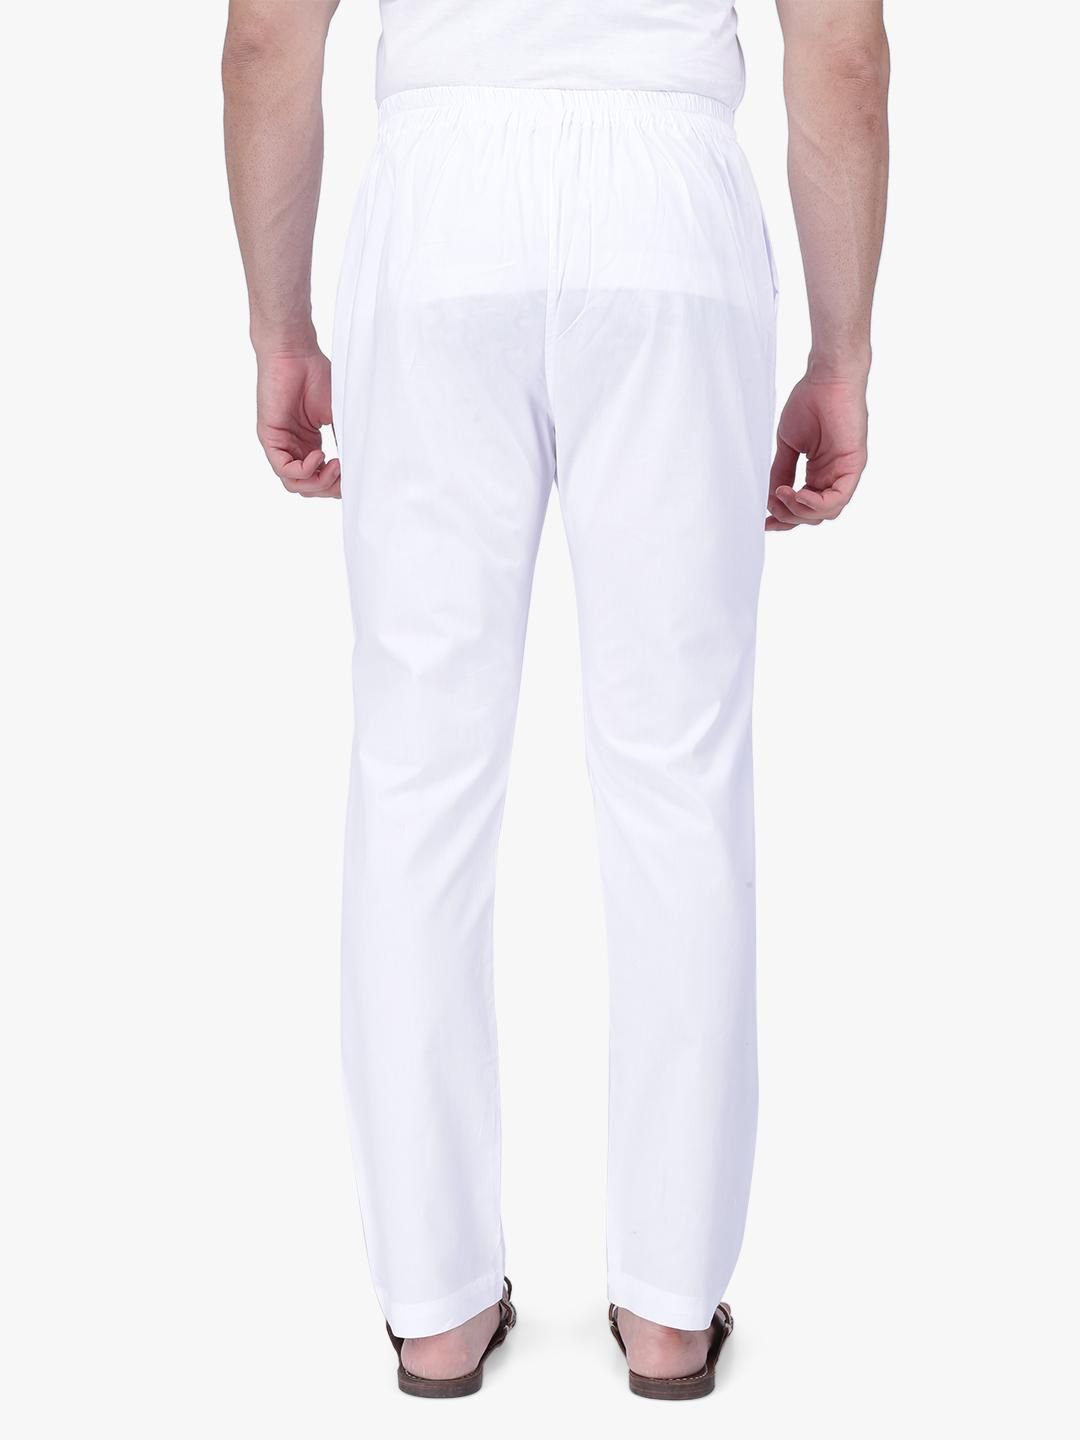 Men's| Buy White Cotton Elastic Churidar Pajama Online In India Pyjama ...